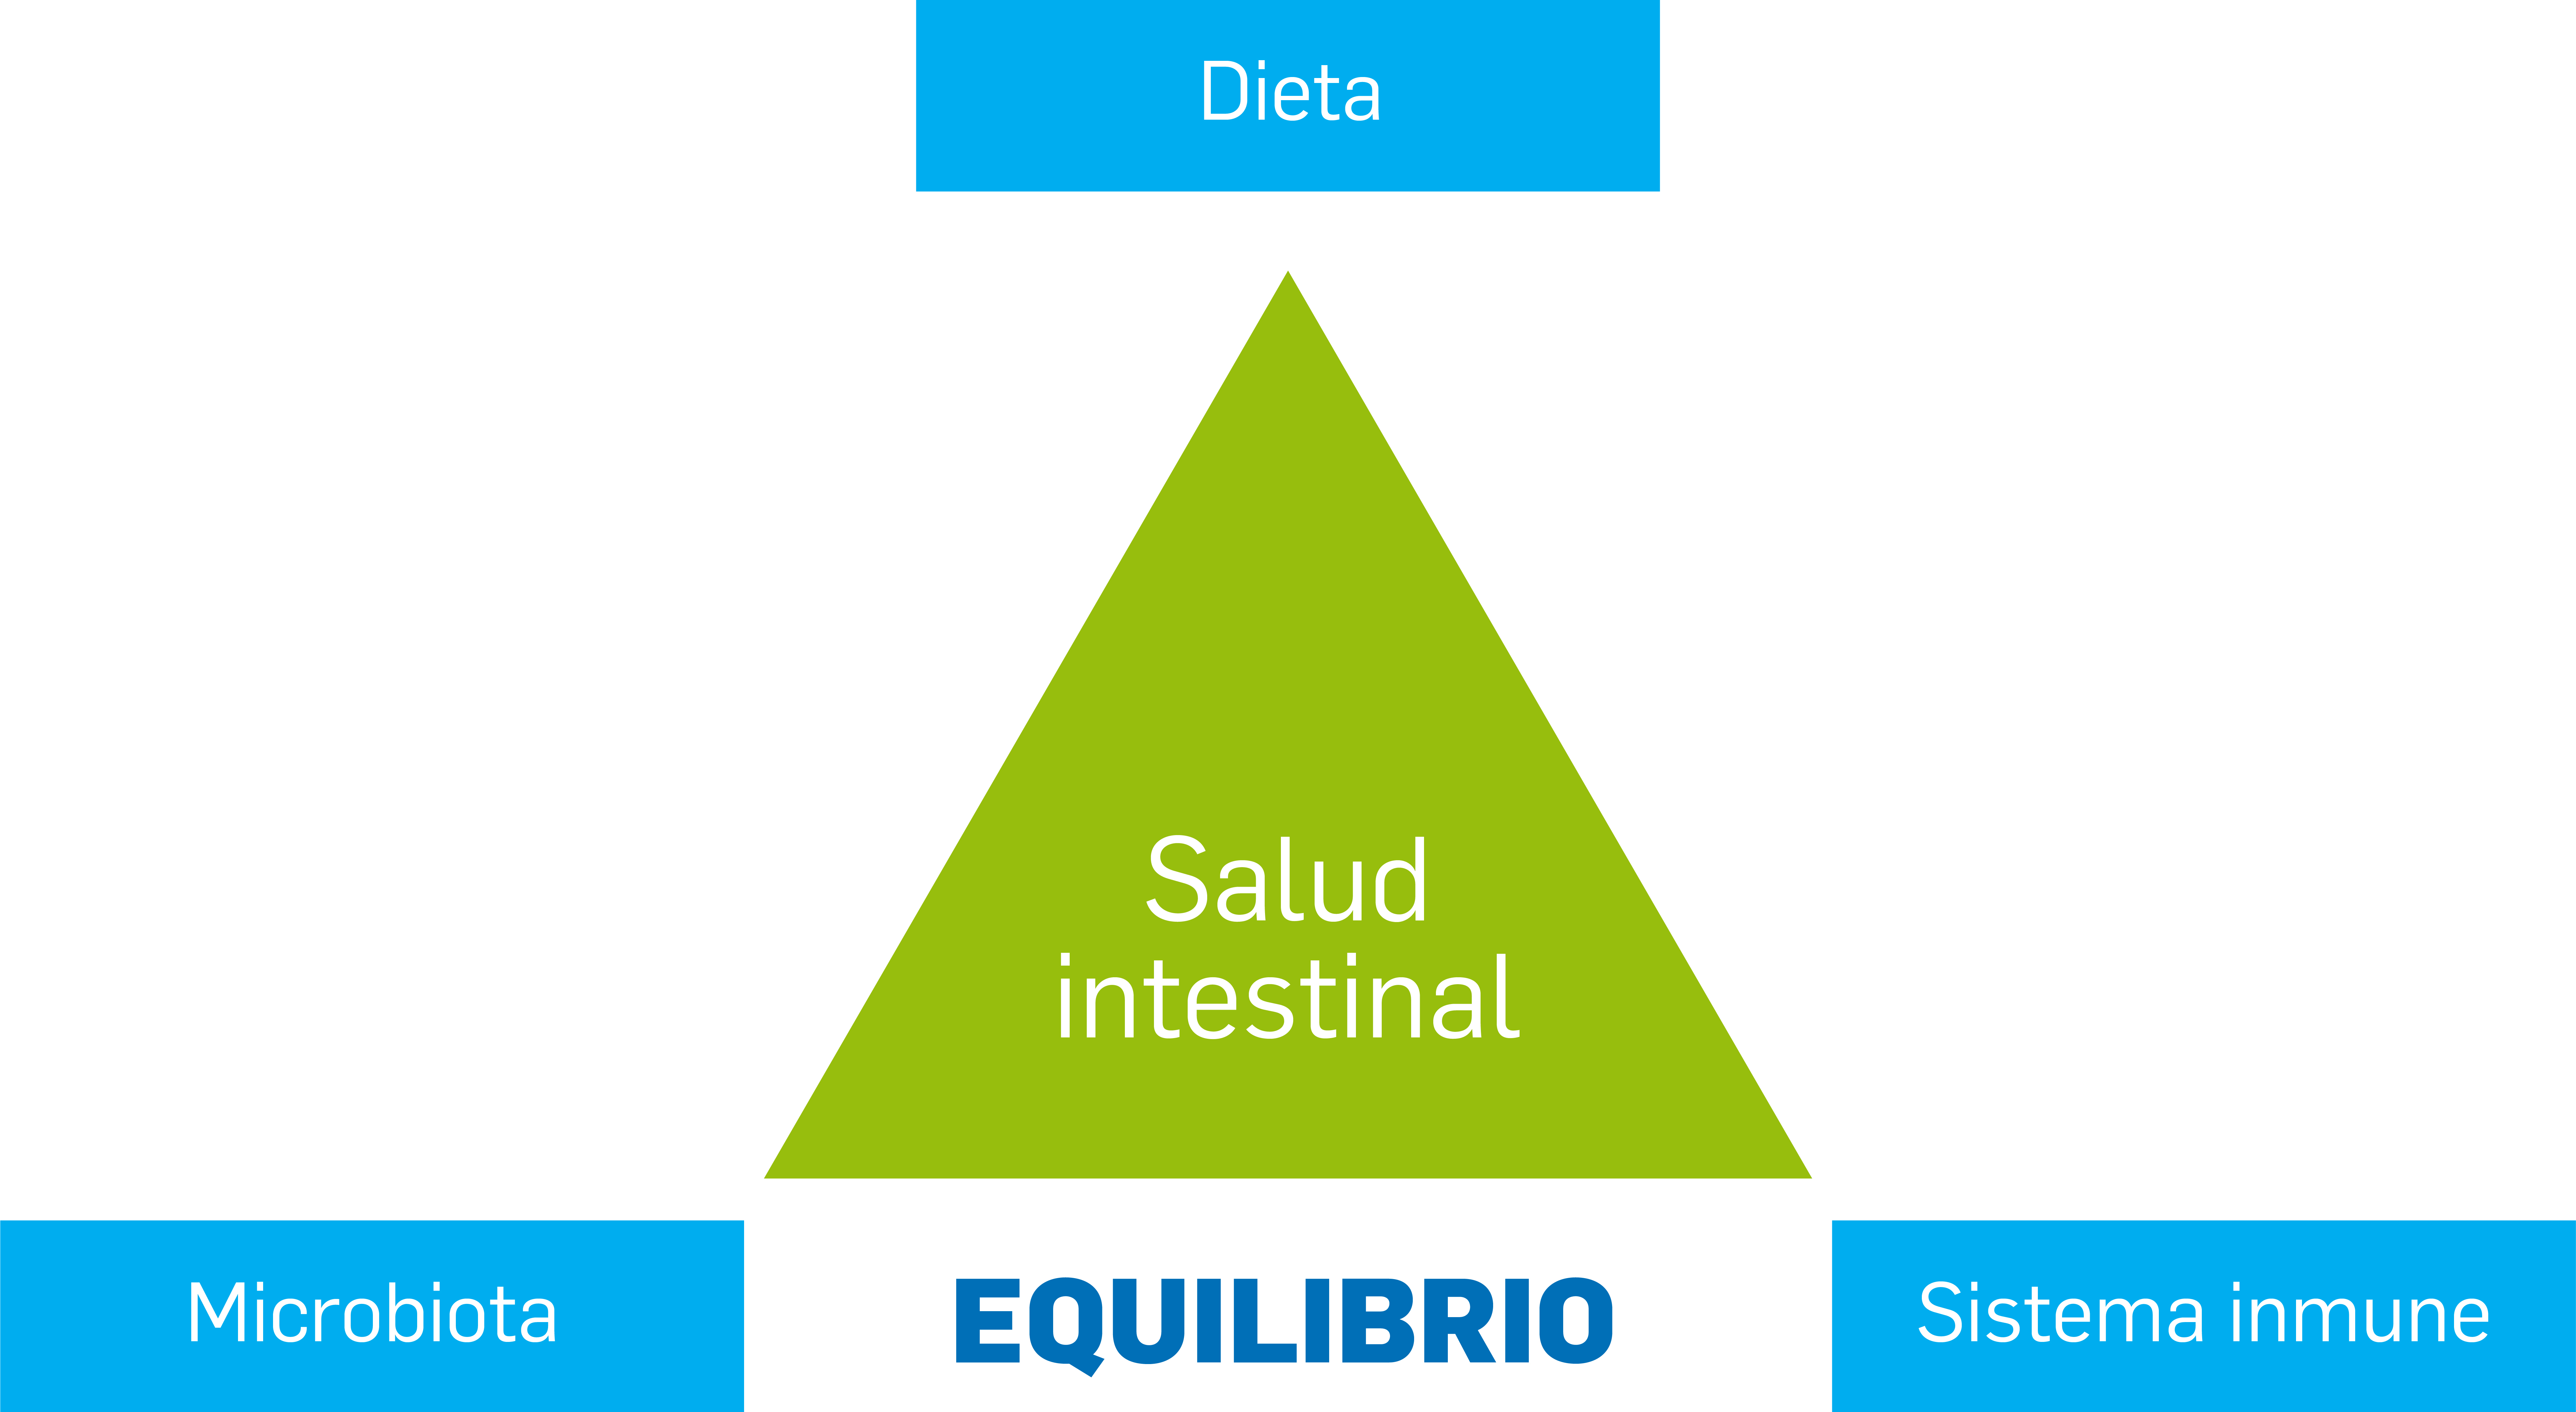 salud intestinal natural power grafico_Intestinal healt triangle.jpg